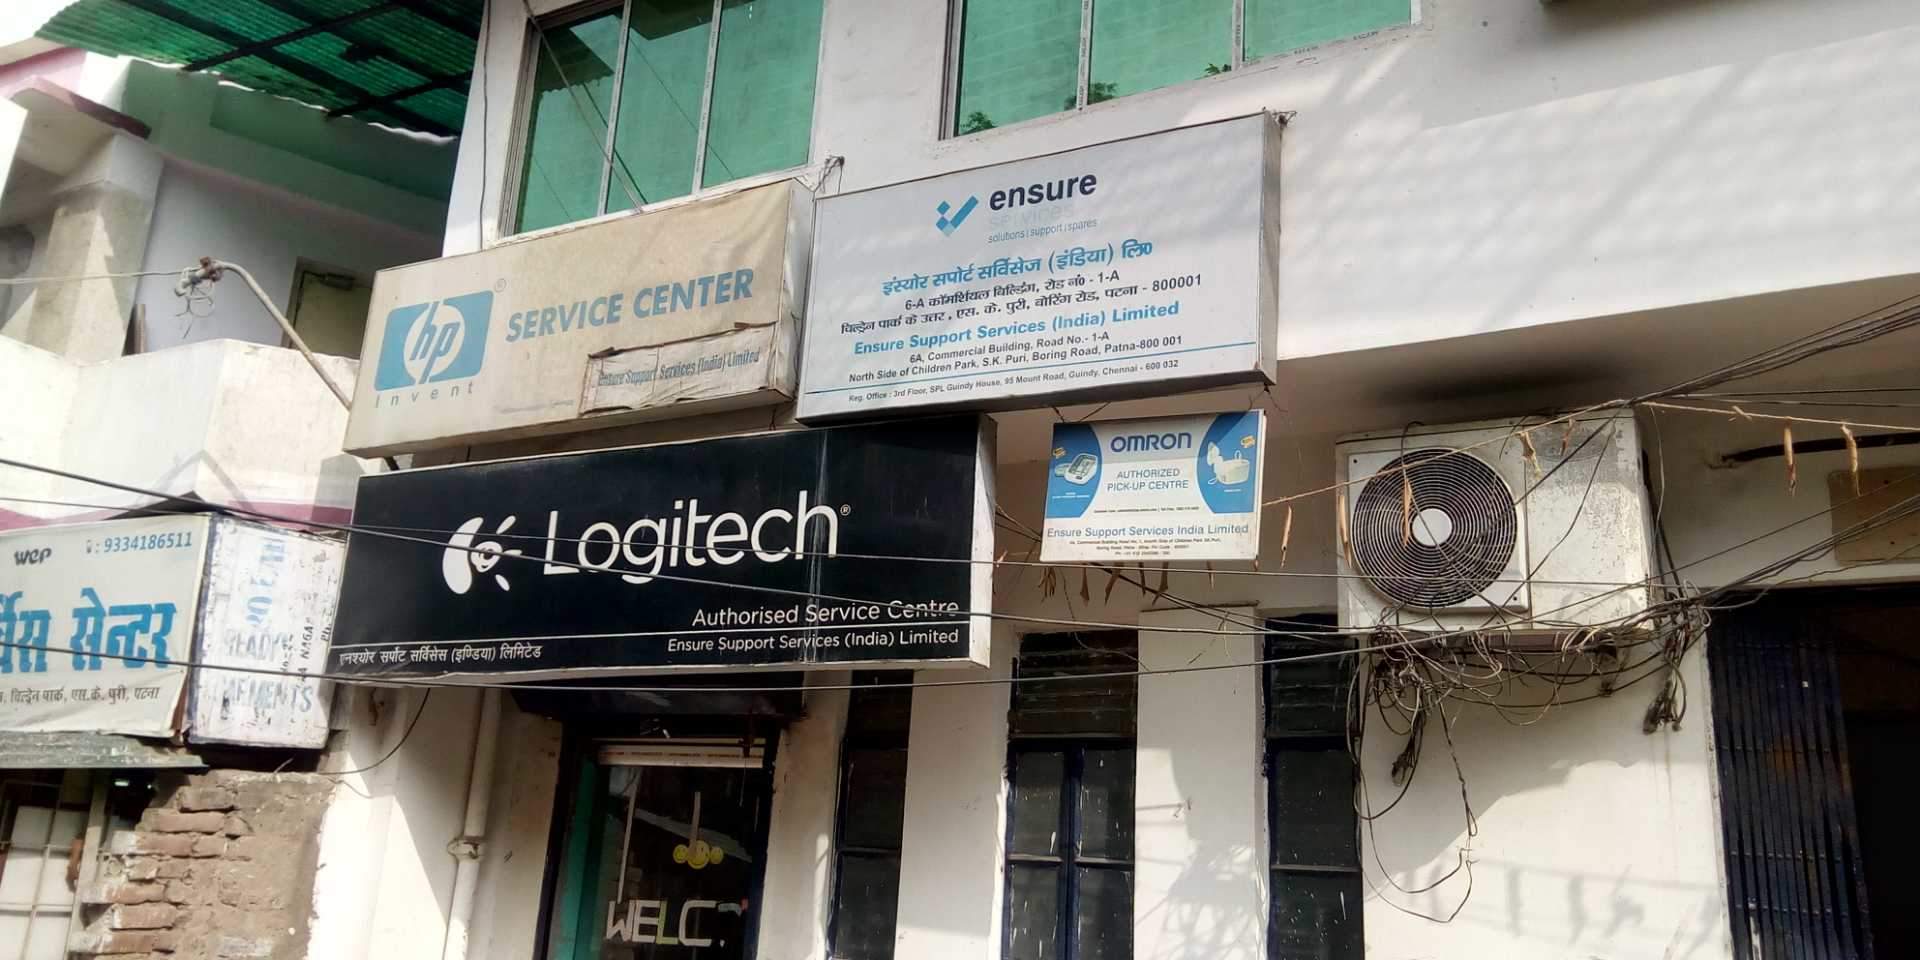 Logitech Service Center in India